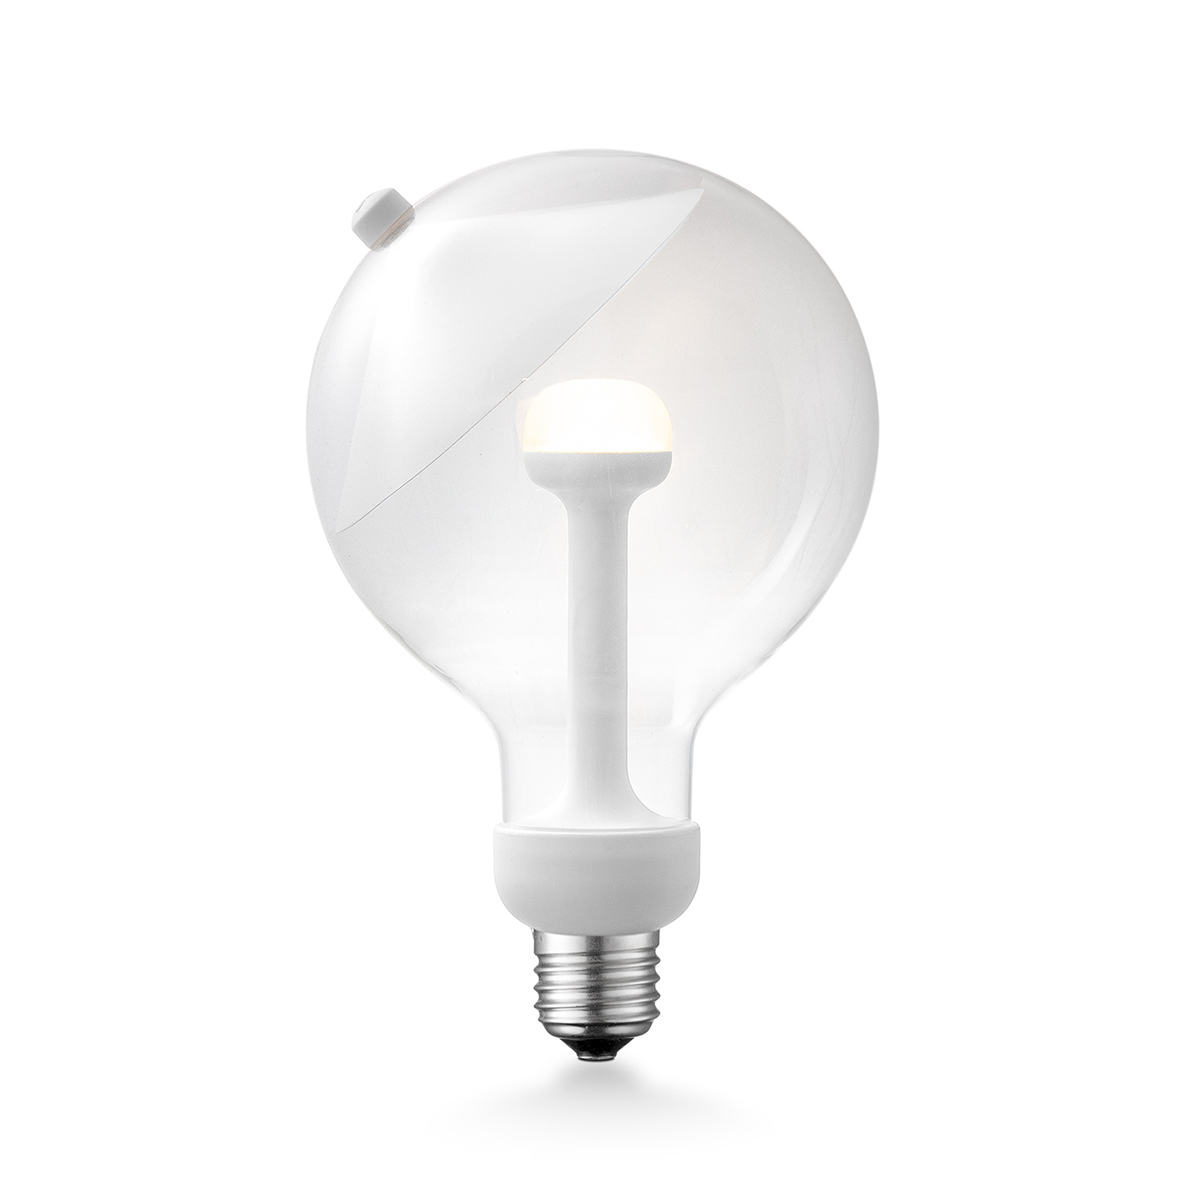 Tangla lighting - 0671-01-D - LED Light Bulb Move me - G120 5.5W Cone white - dimmable - E27 / E26